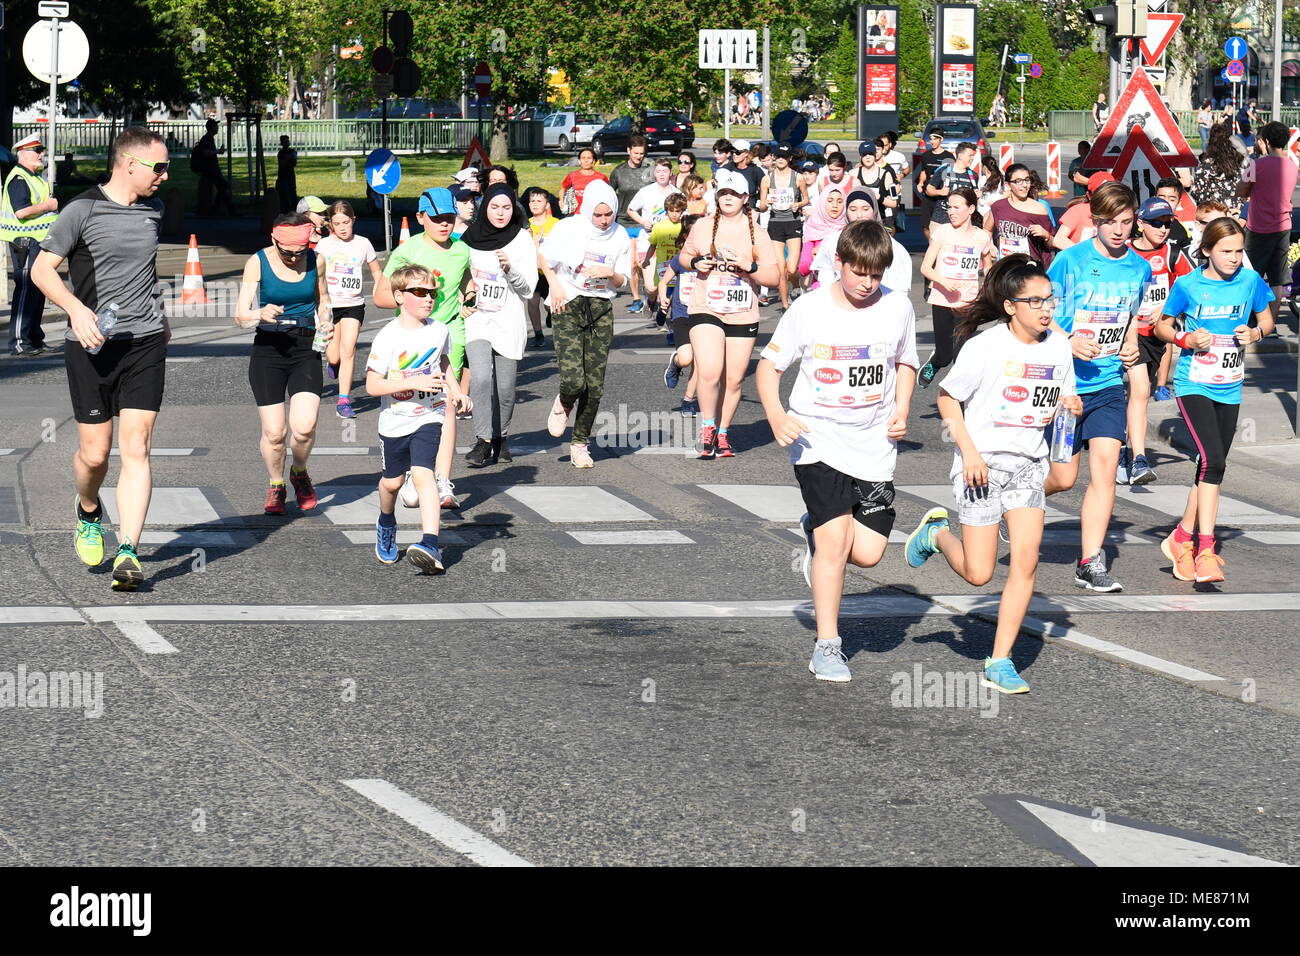 Vienna City Marathon High Resolution Stock Photography and Images - Alamy